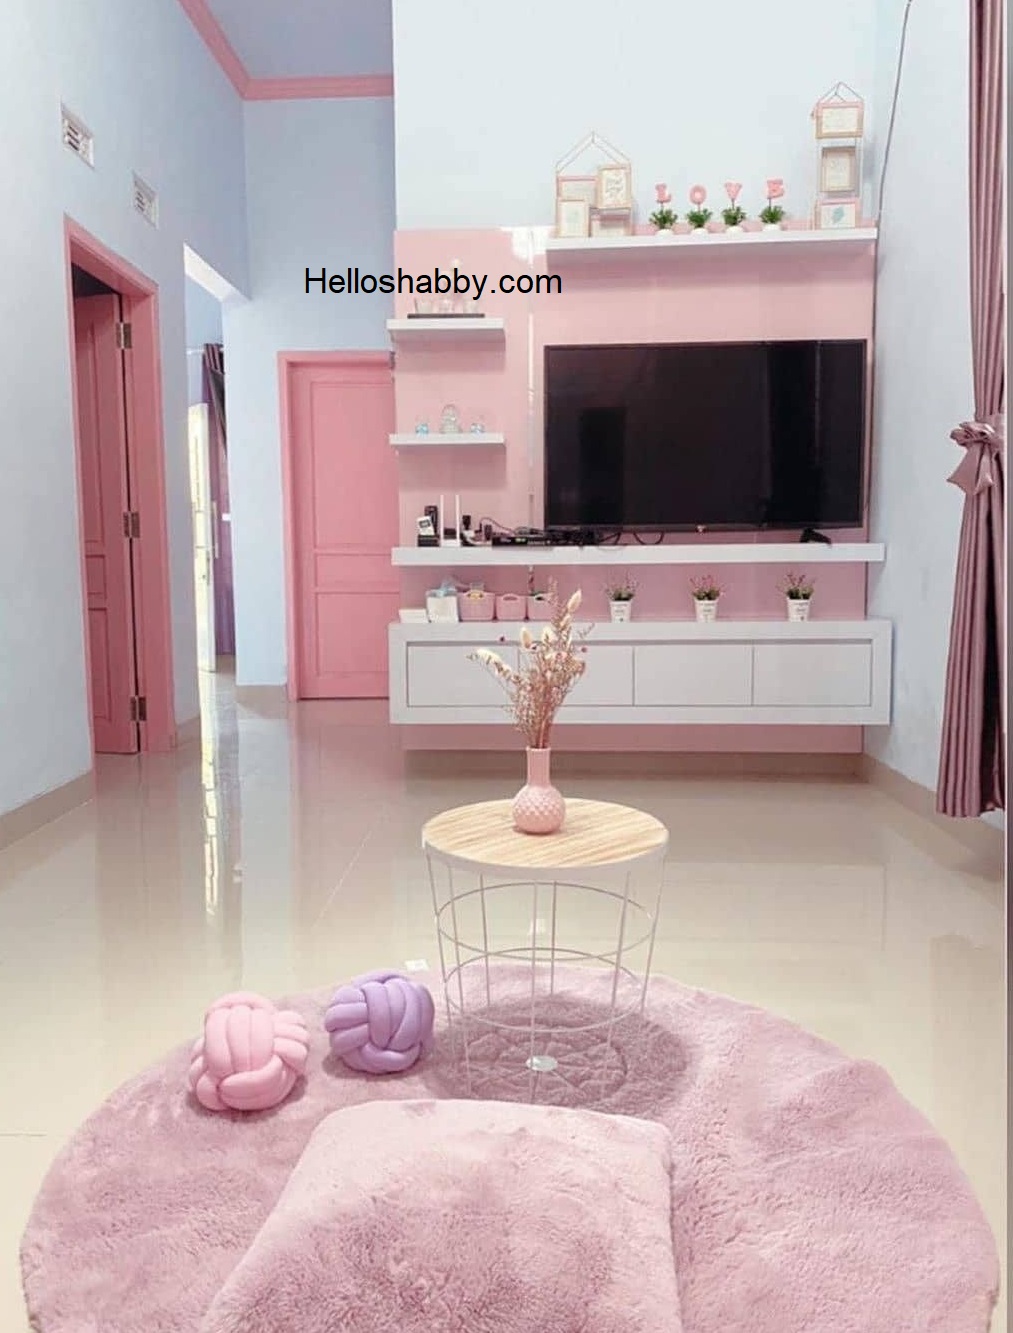 Inspirasi Terbaru Ruang Keluarga Untuk Rumah Type 36 HelloShabbycom Interior And Exterior Solutions